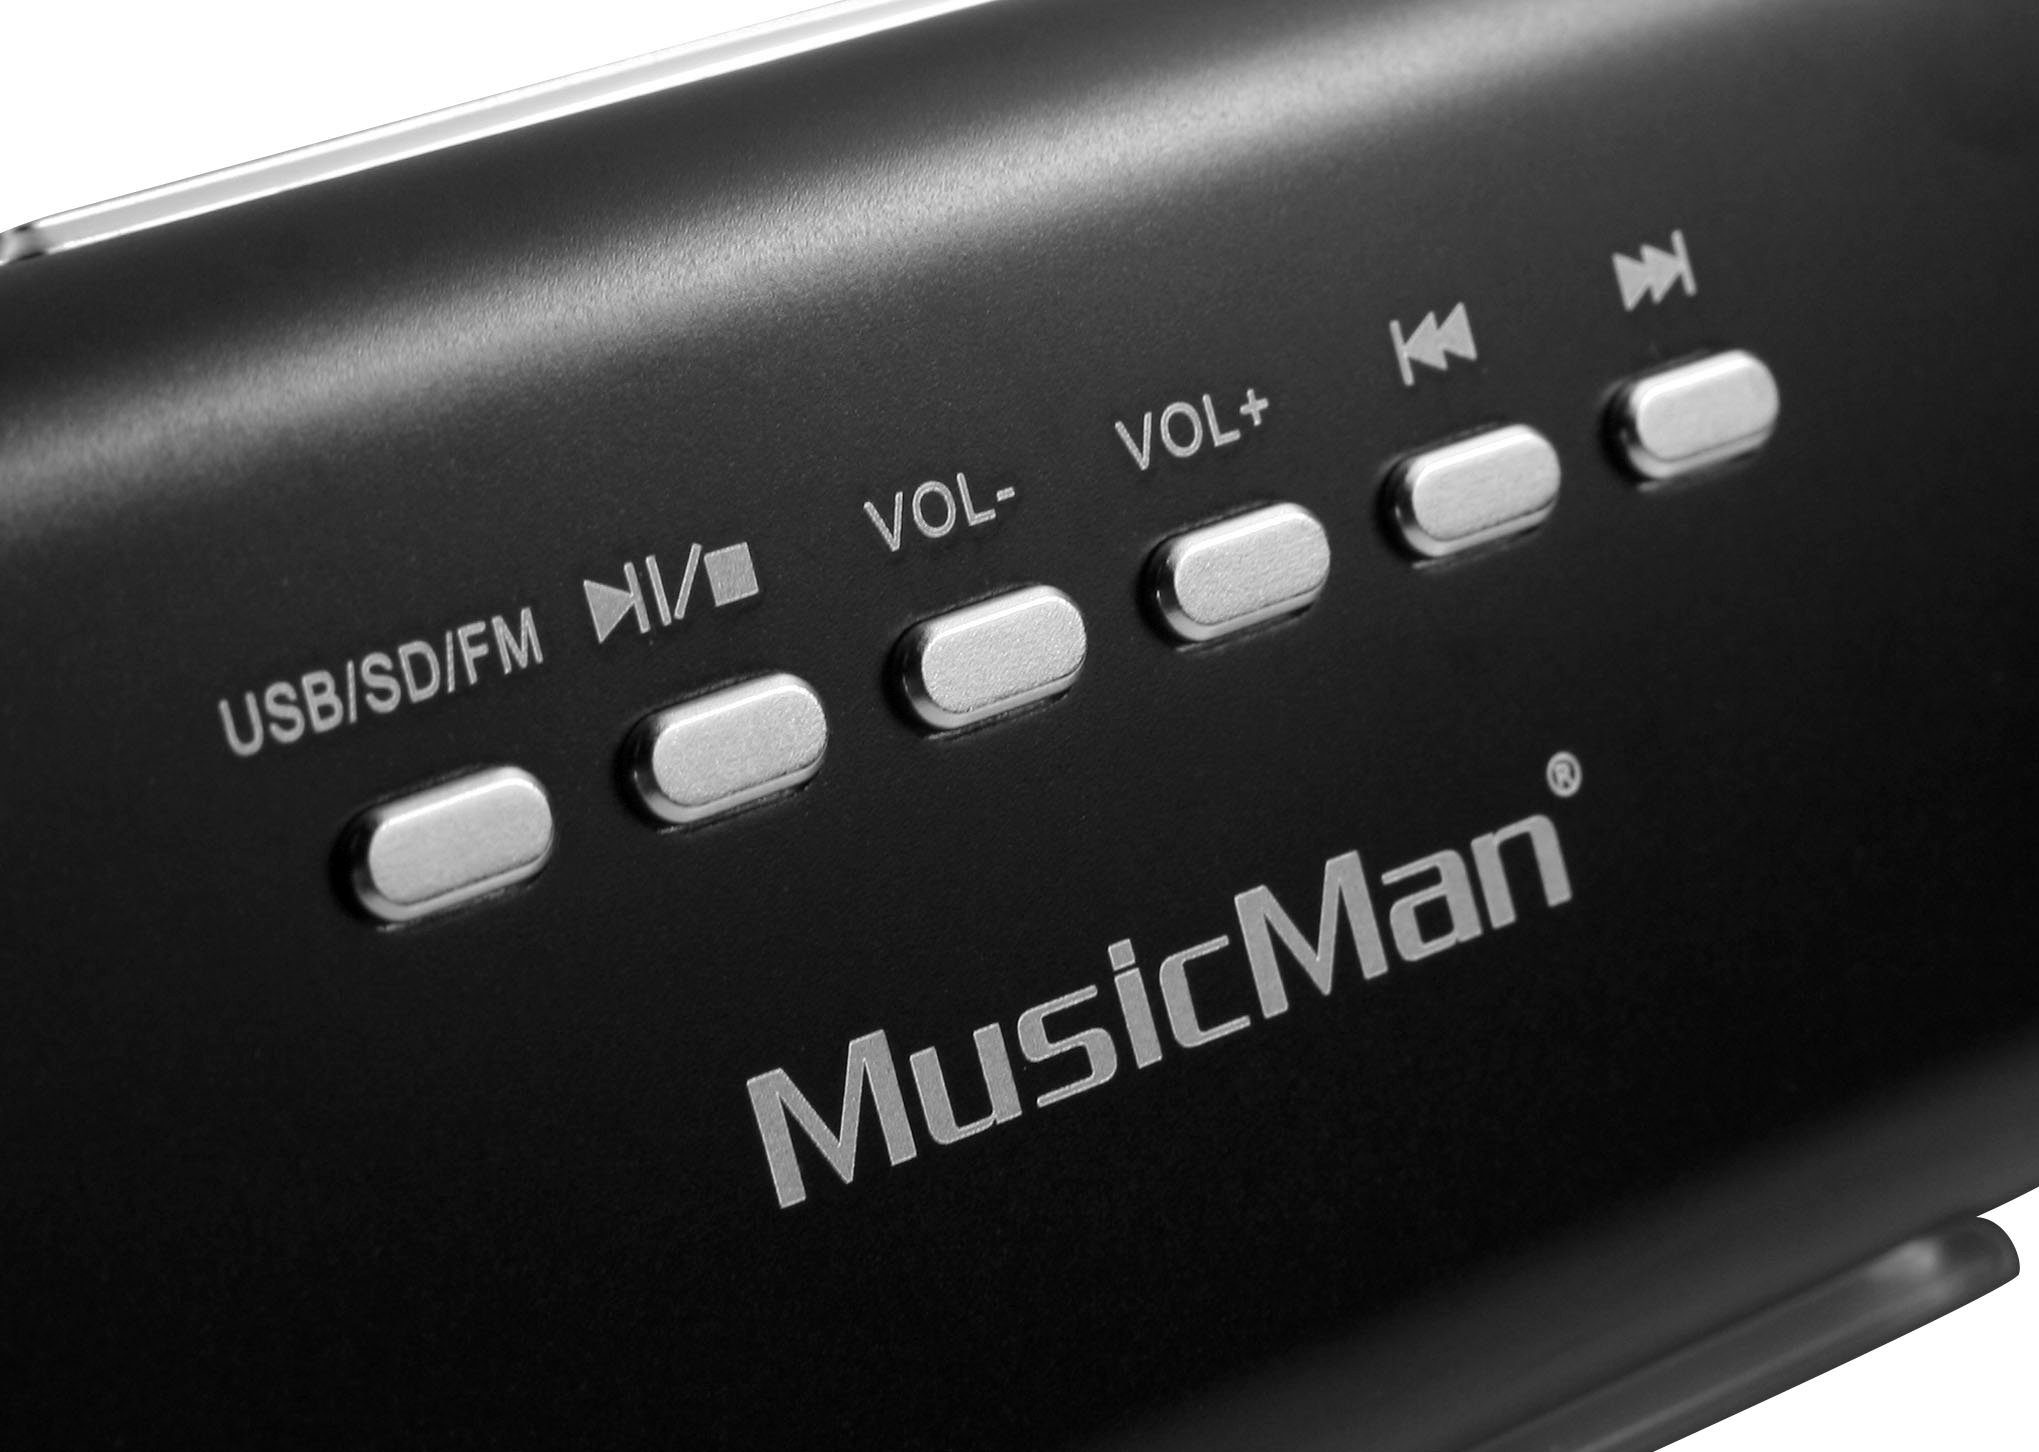 Technaxx MusicMan schwarz Portable-Lautsprecher W) 2.0 Soundstation (6 MA